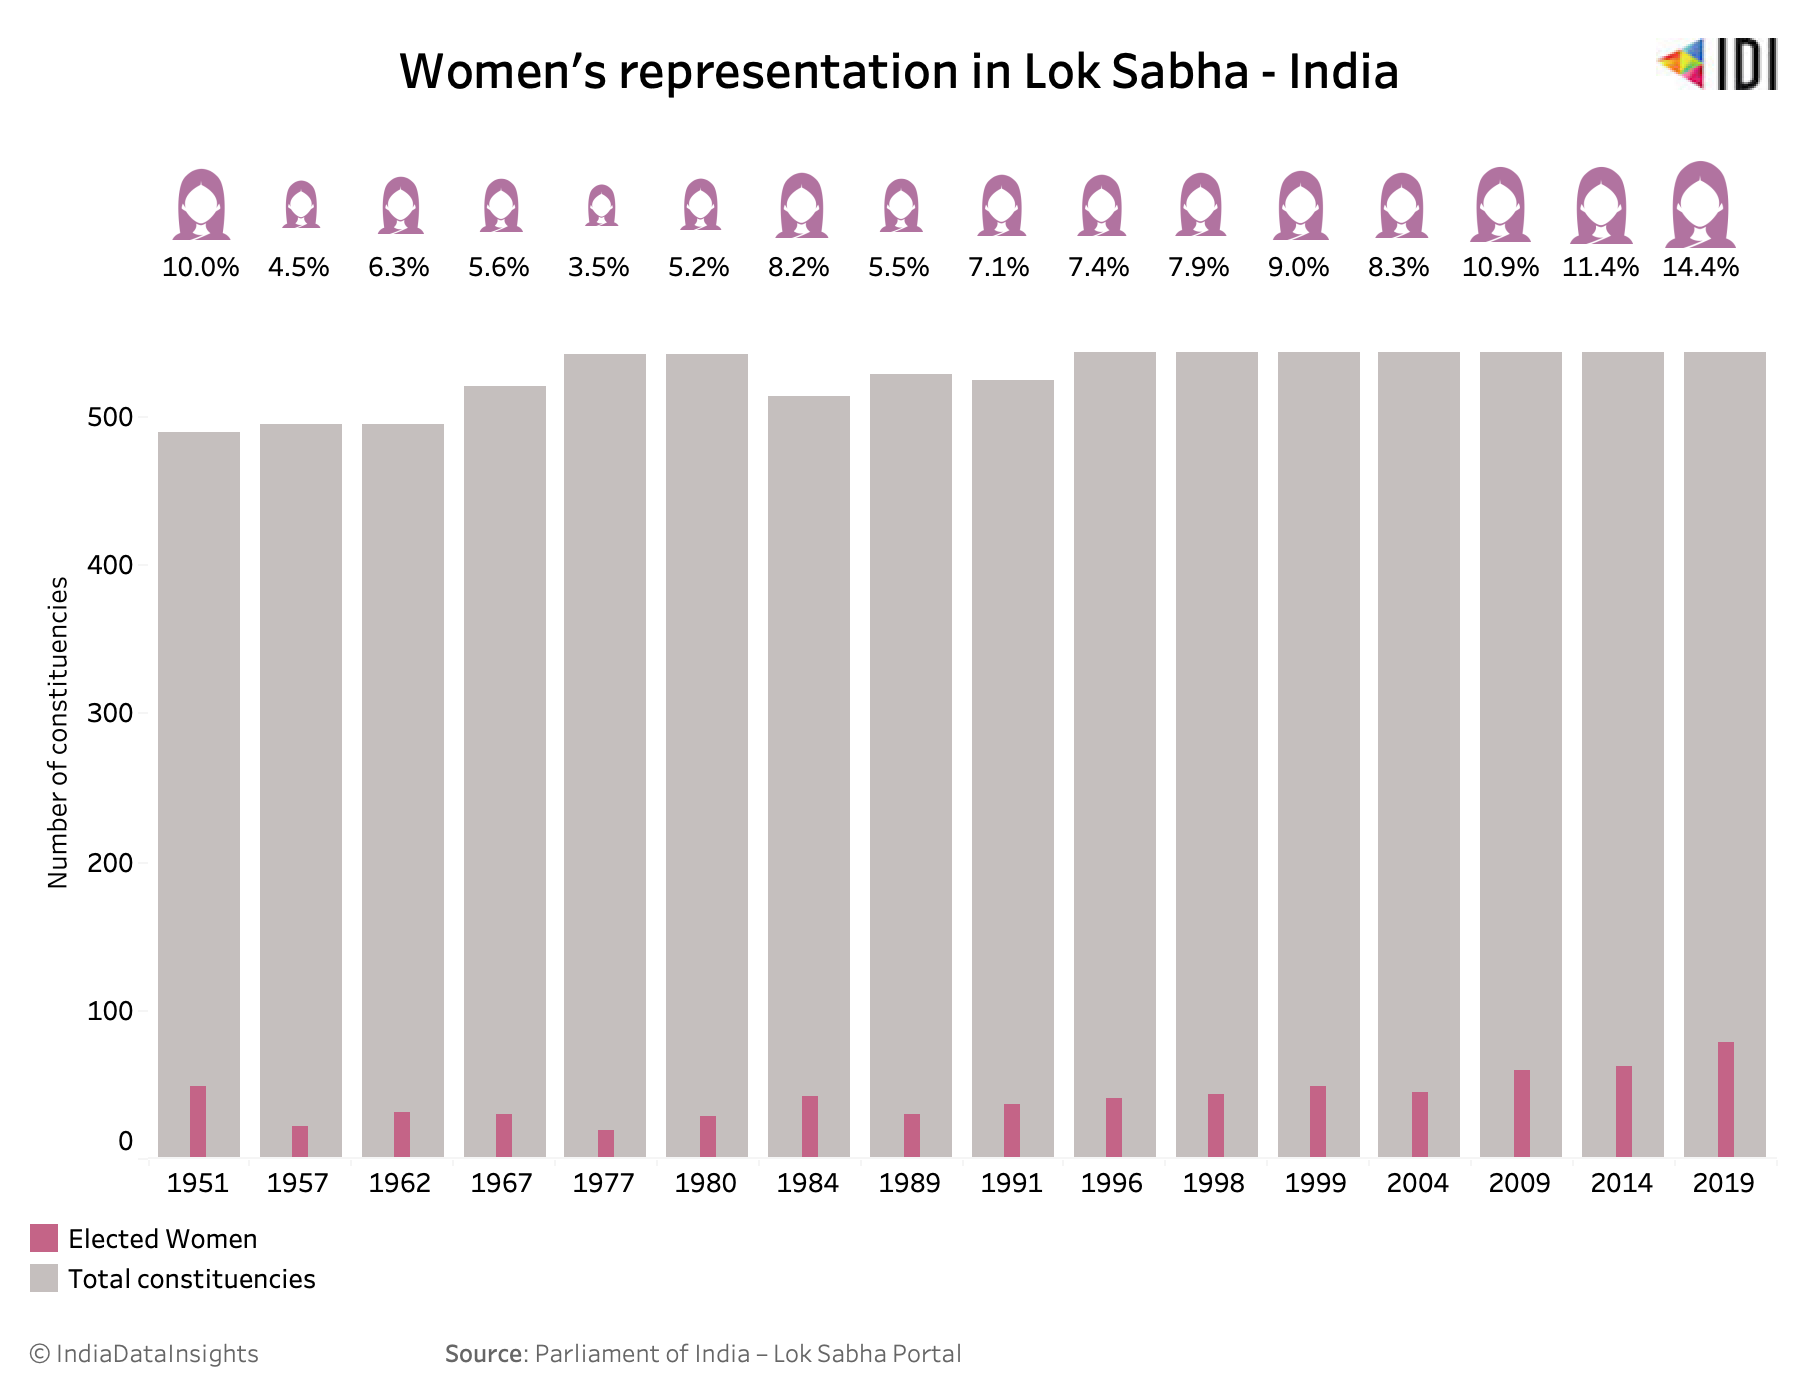 Share of women in lok sabha in India